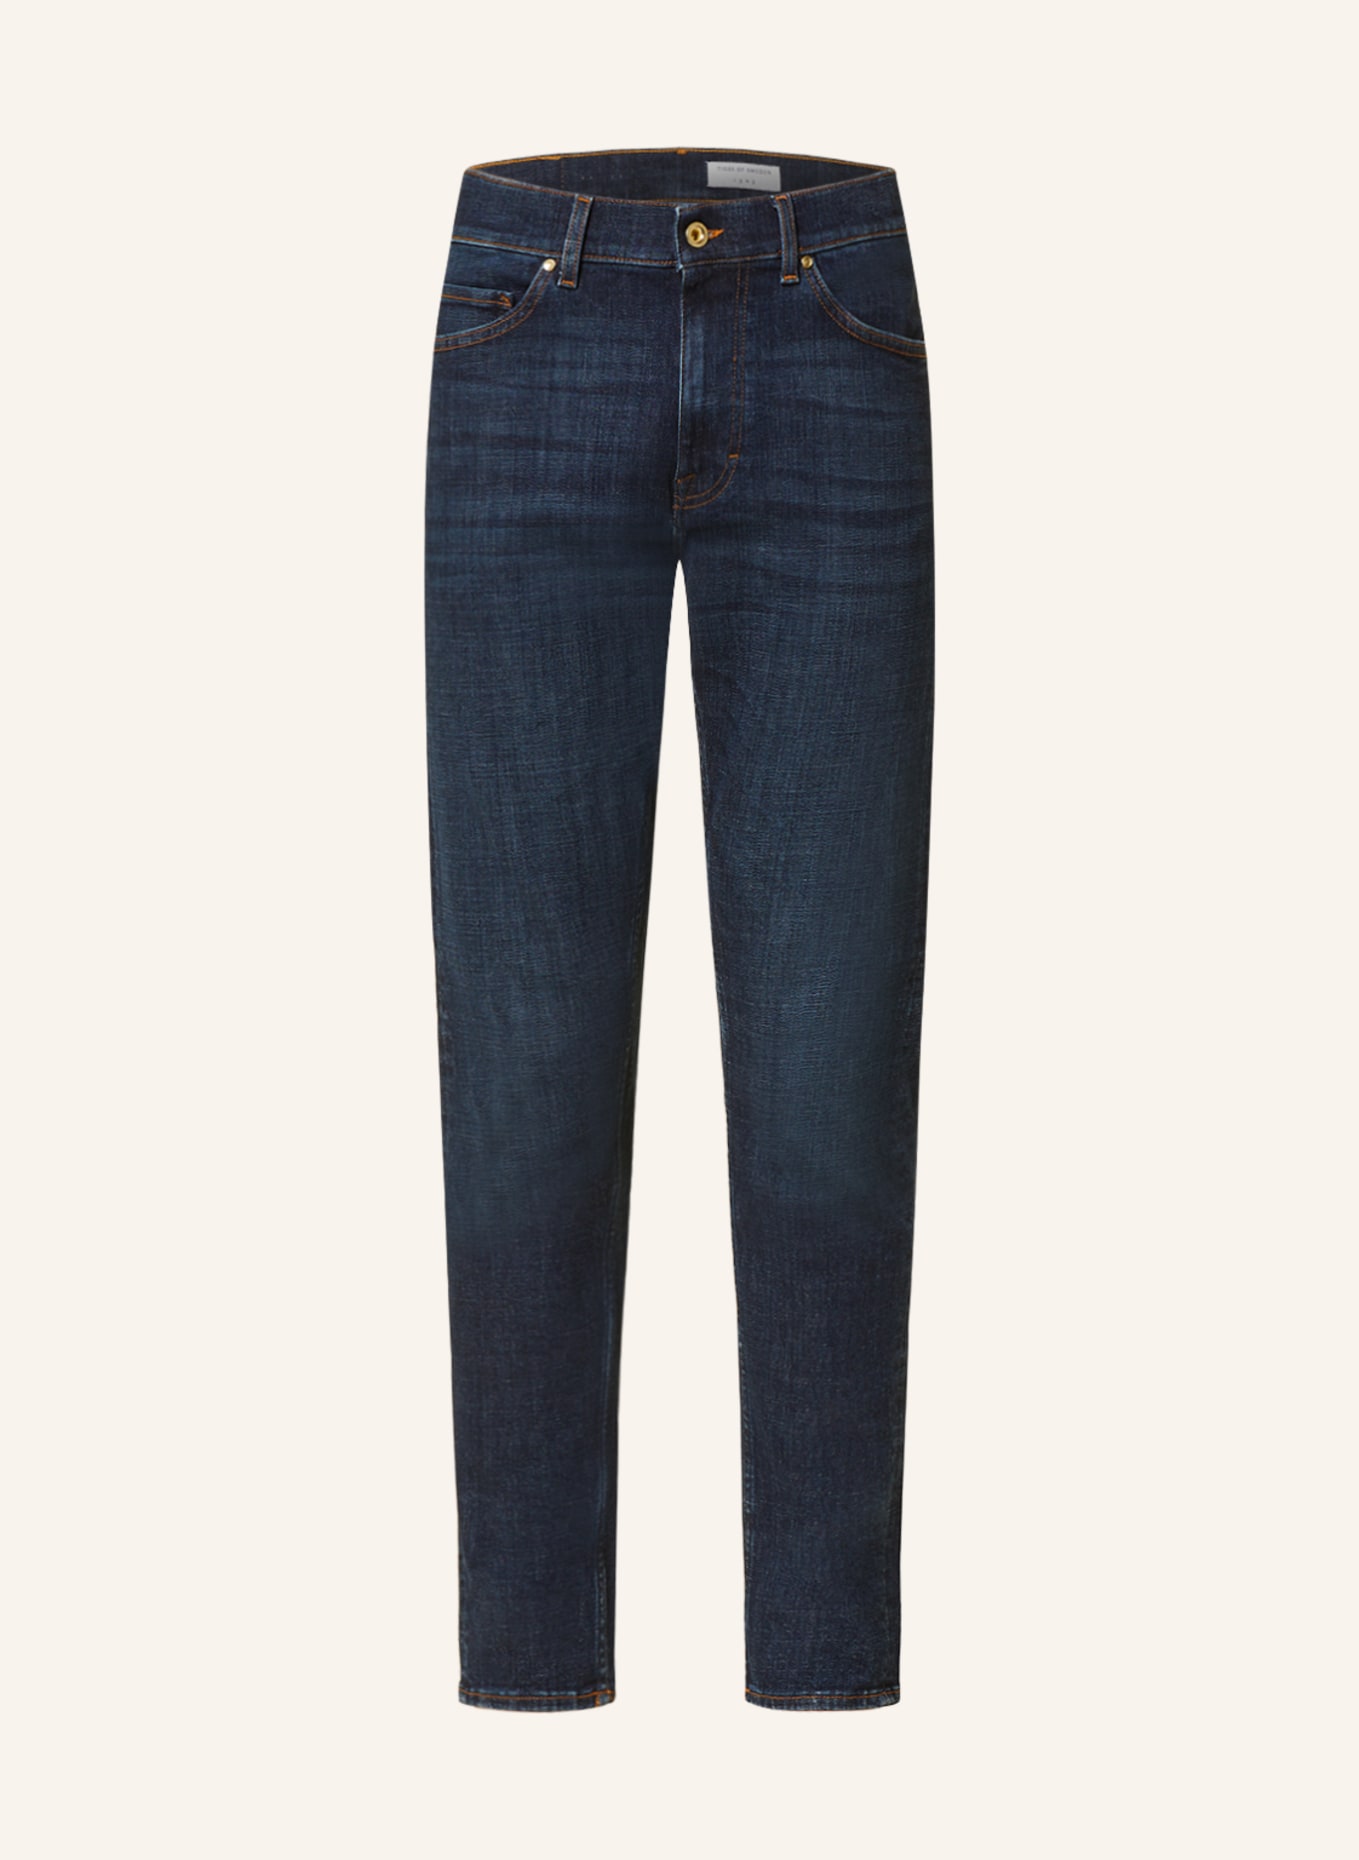 TIGER OF SWEDEN Jeans EVOLVE Slim Fit, Farbe: 21F MEDIUM BLUE (Bild 1)